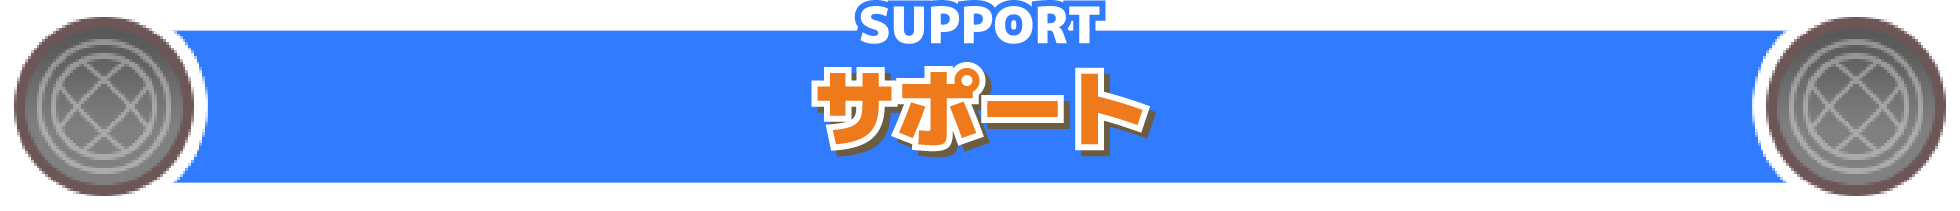 SUPPORT サポート